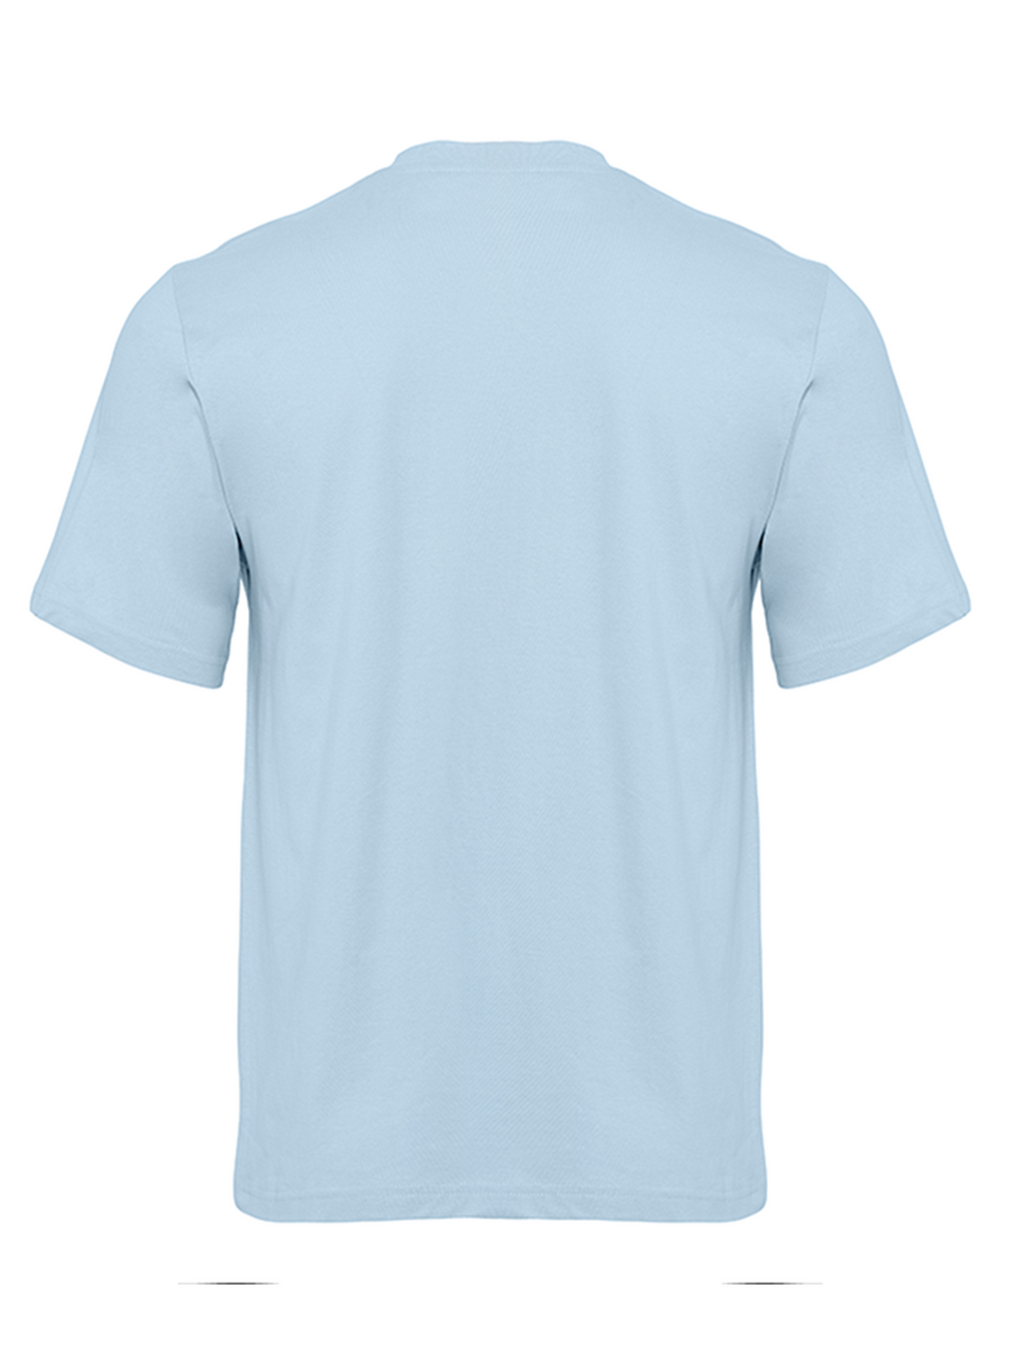 Camiseta básica orgánica - azul claro